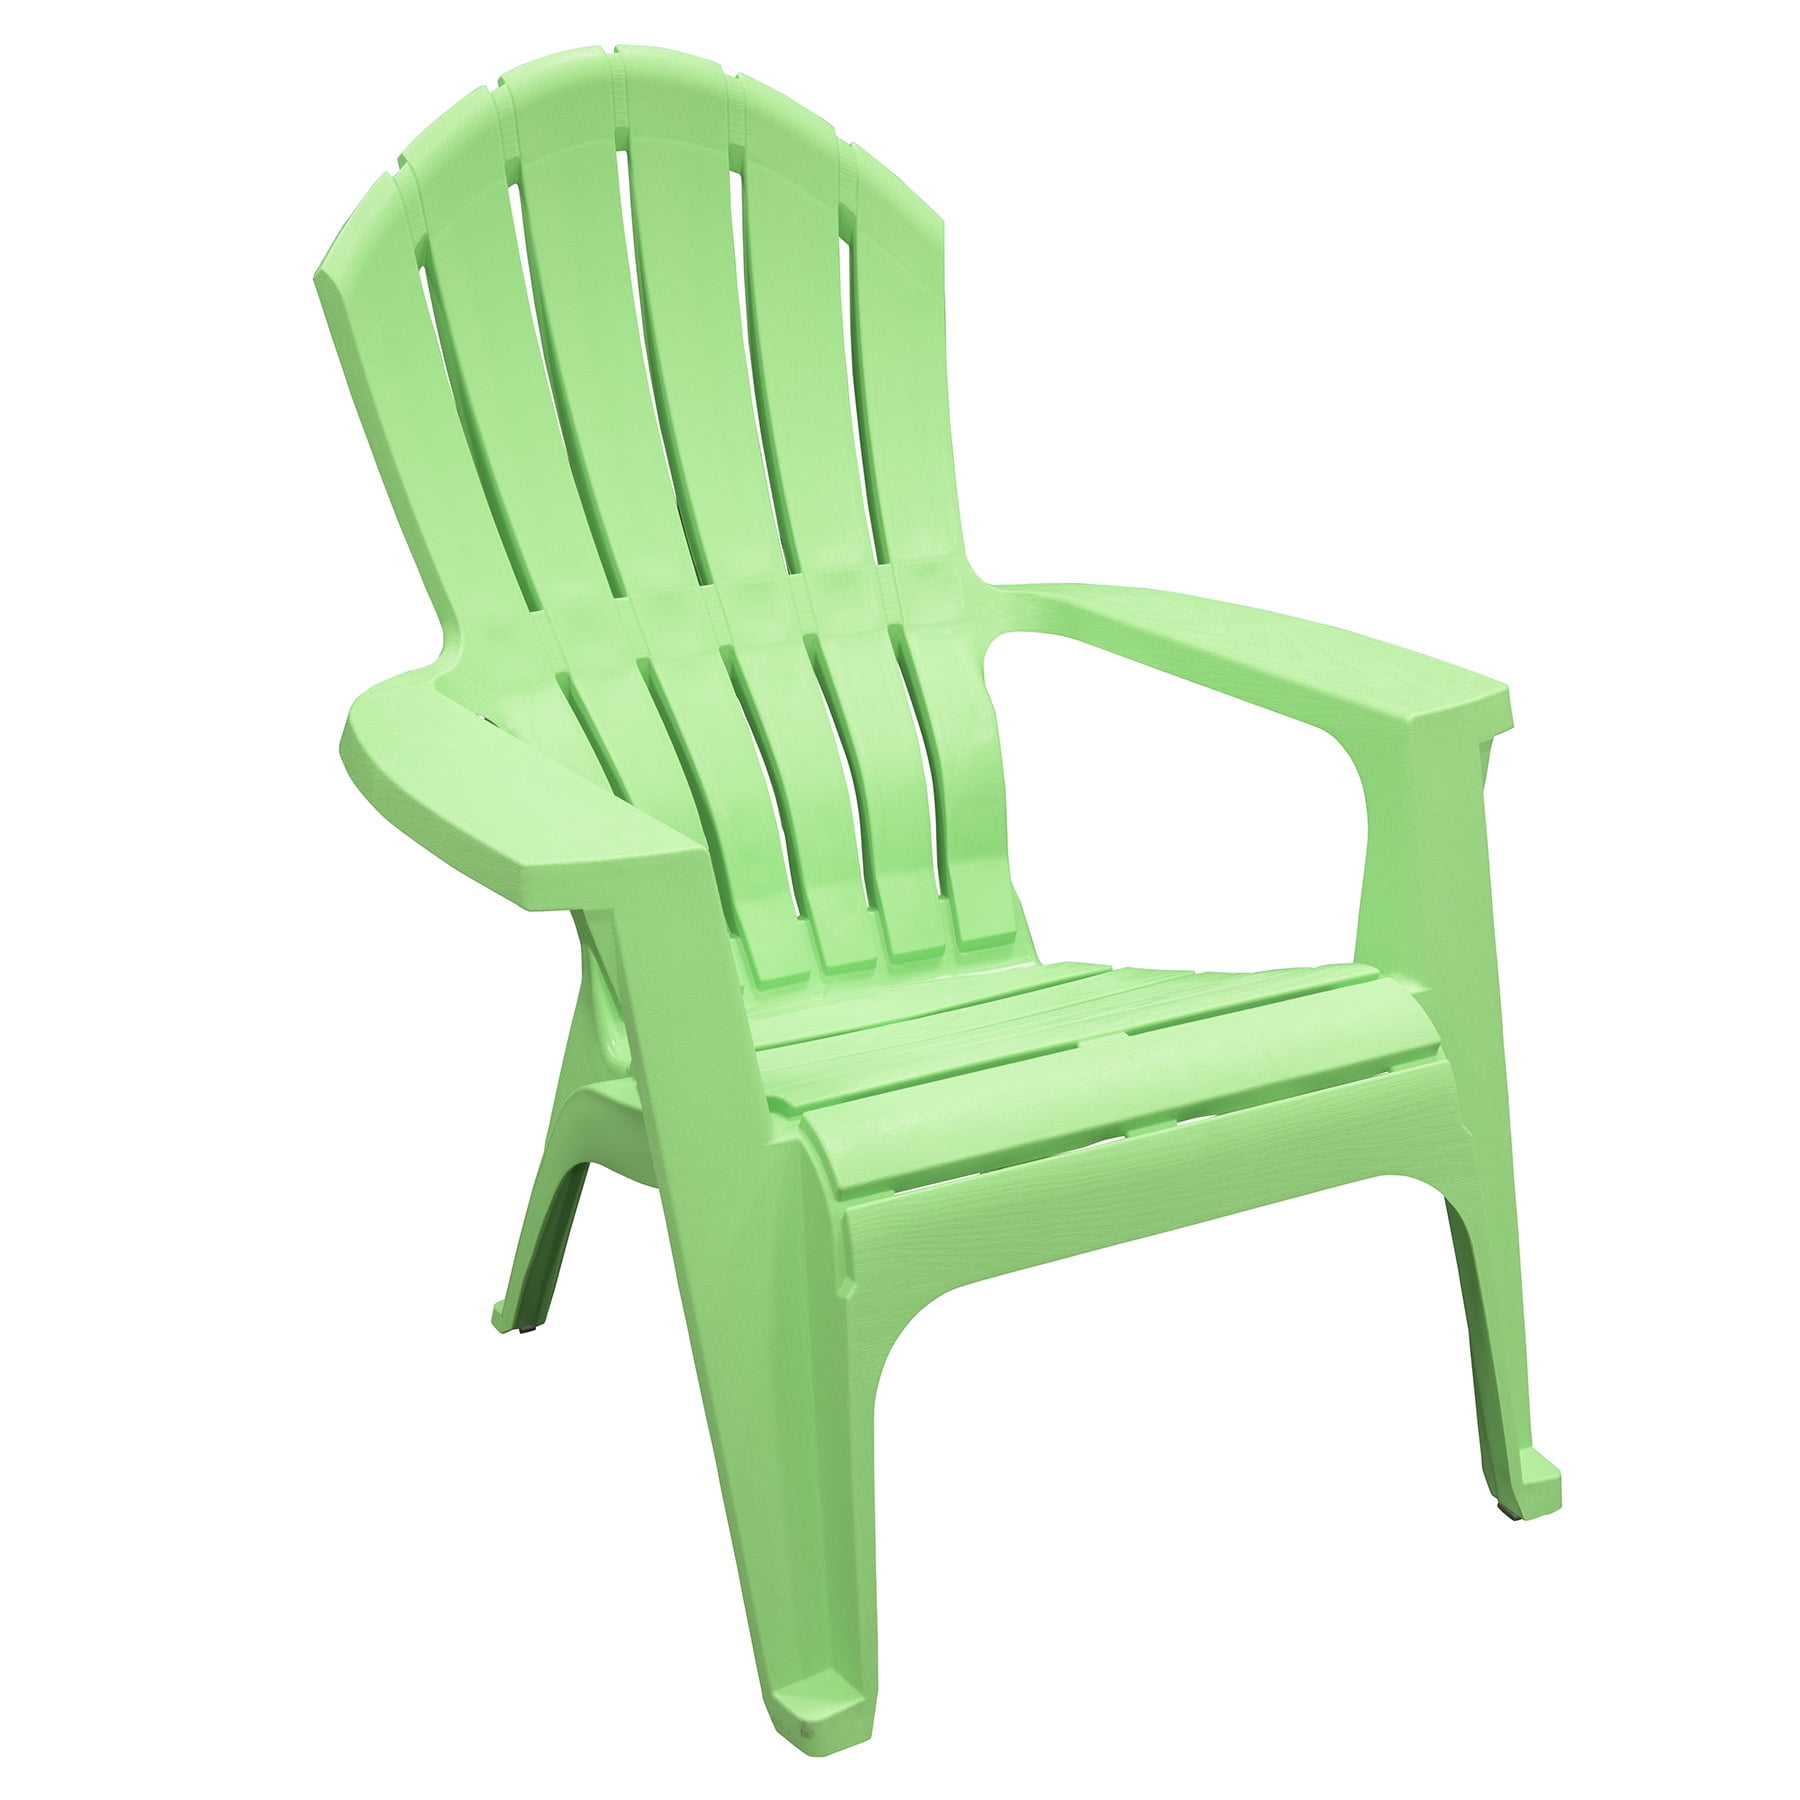 Adams USA RealComfort Adirondack Chair, Summer Green - Walmart.com